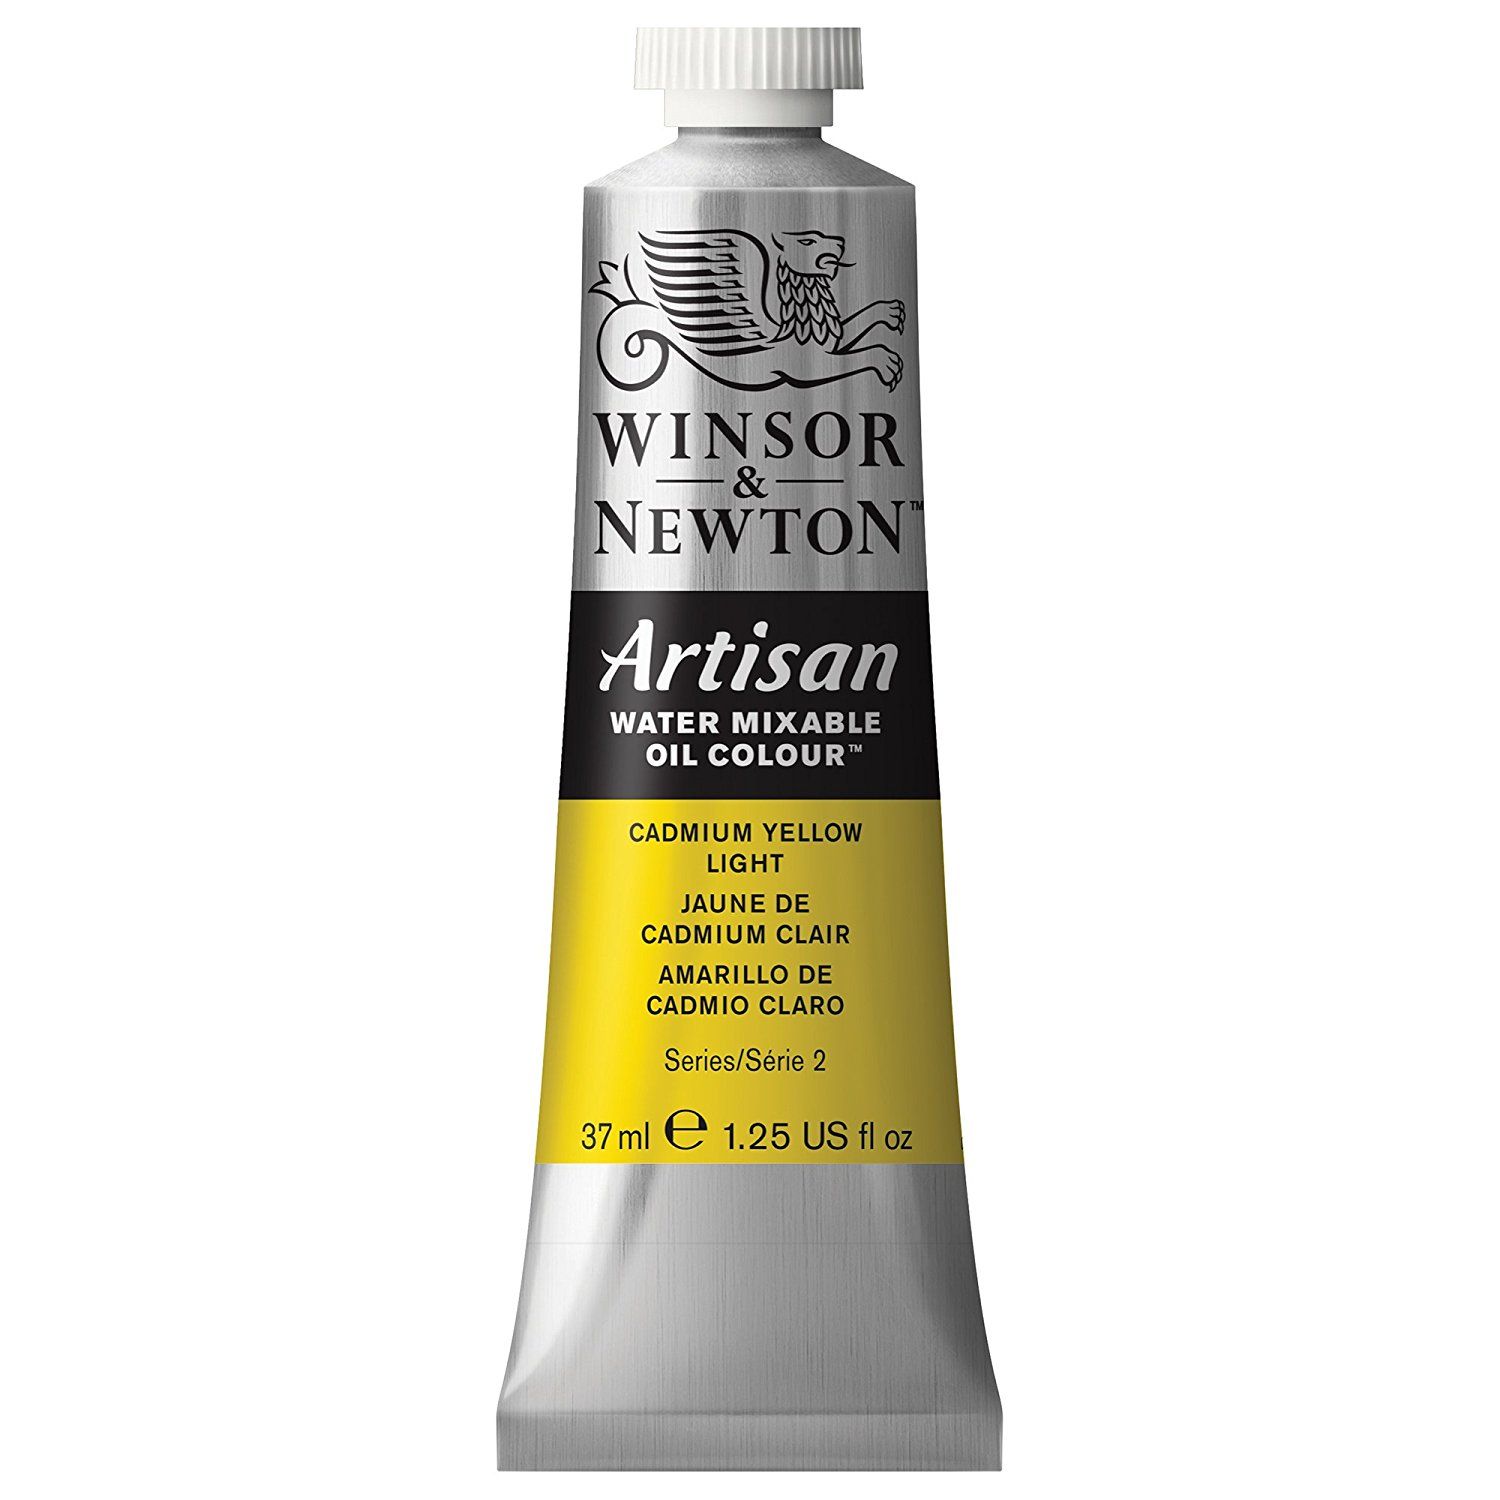 Artisan Water Mixable Oil - Cadmium Yellow Light 37ml